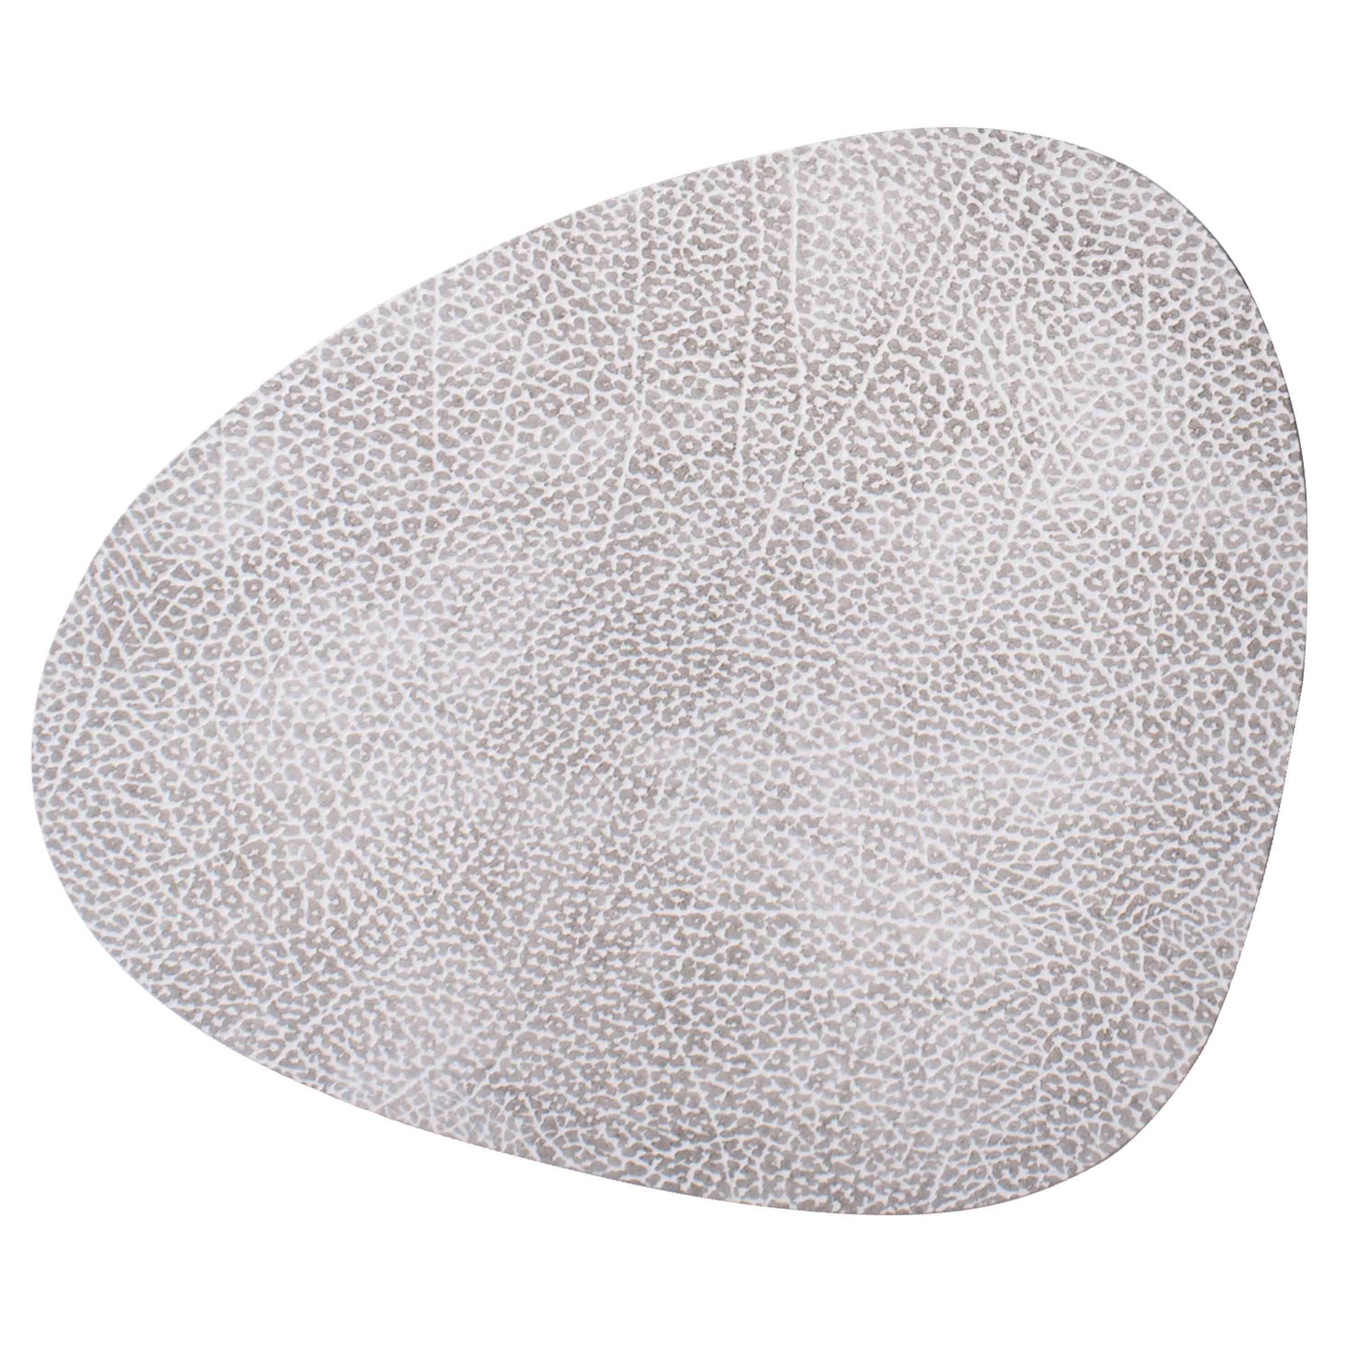 Curve S Table Mat Hippo, 24x28 cm, White/Grey